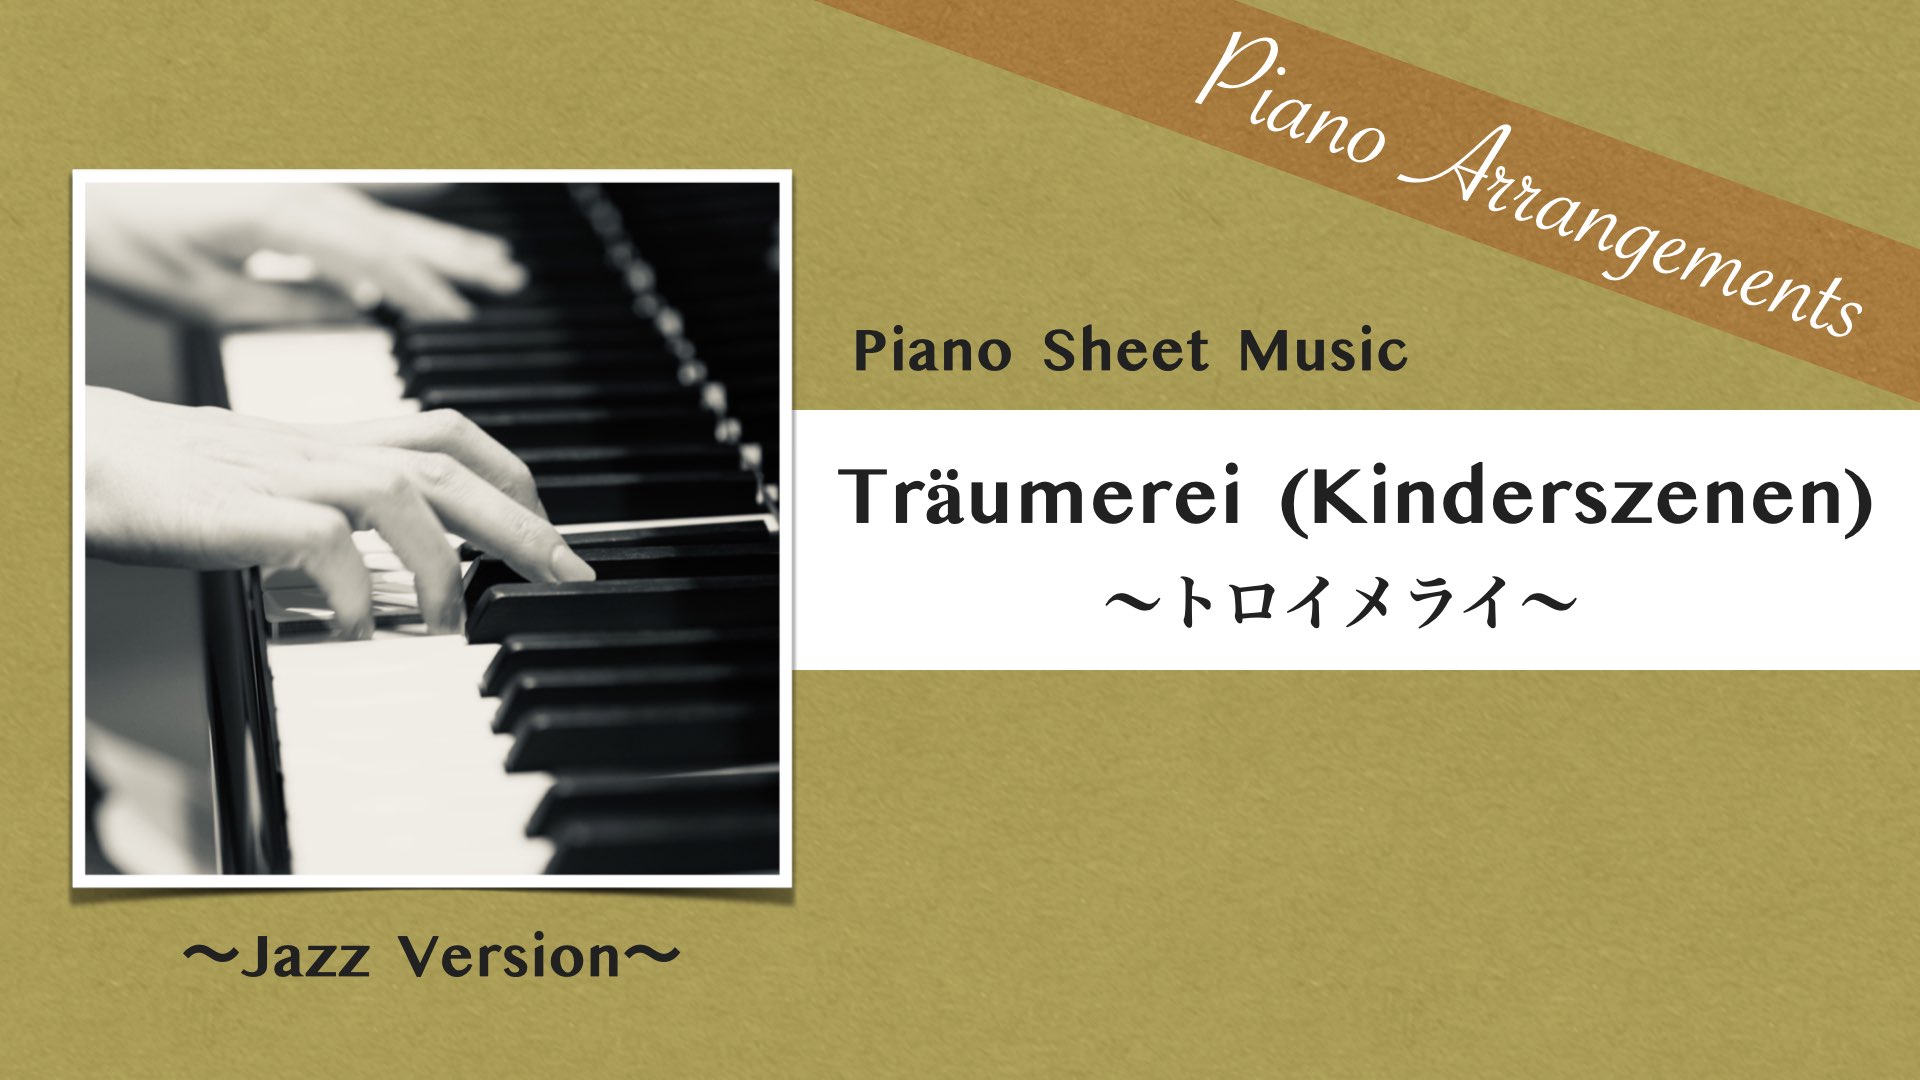 Träumerei (Kinderszenen) /Jazz Arrangement【Piano Sheet Music】